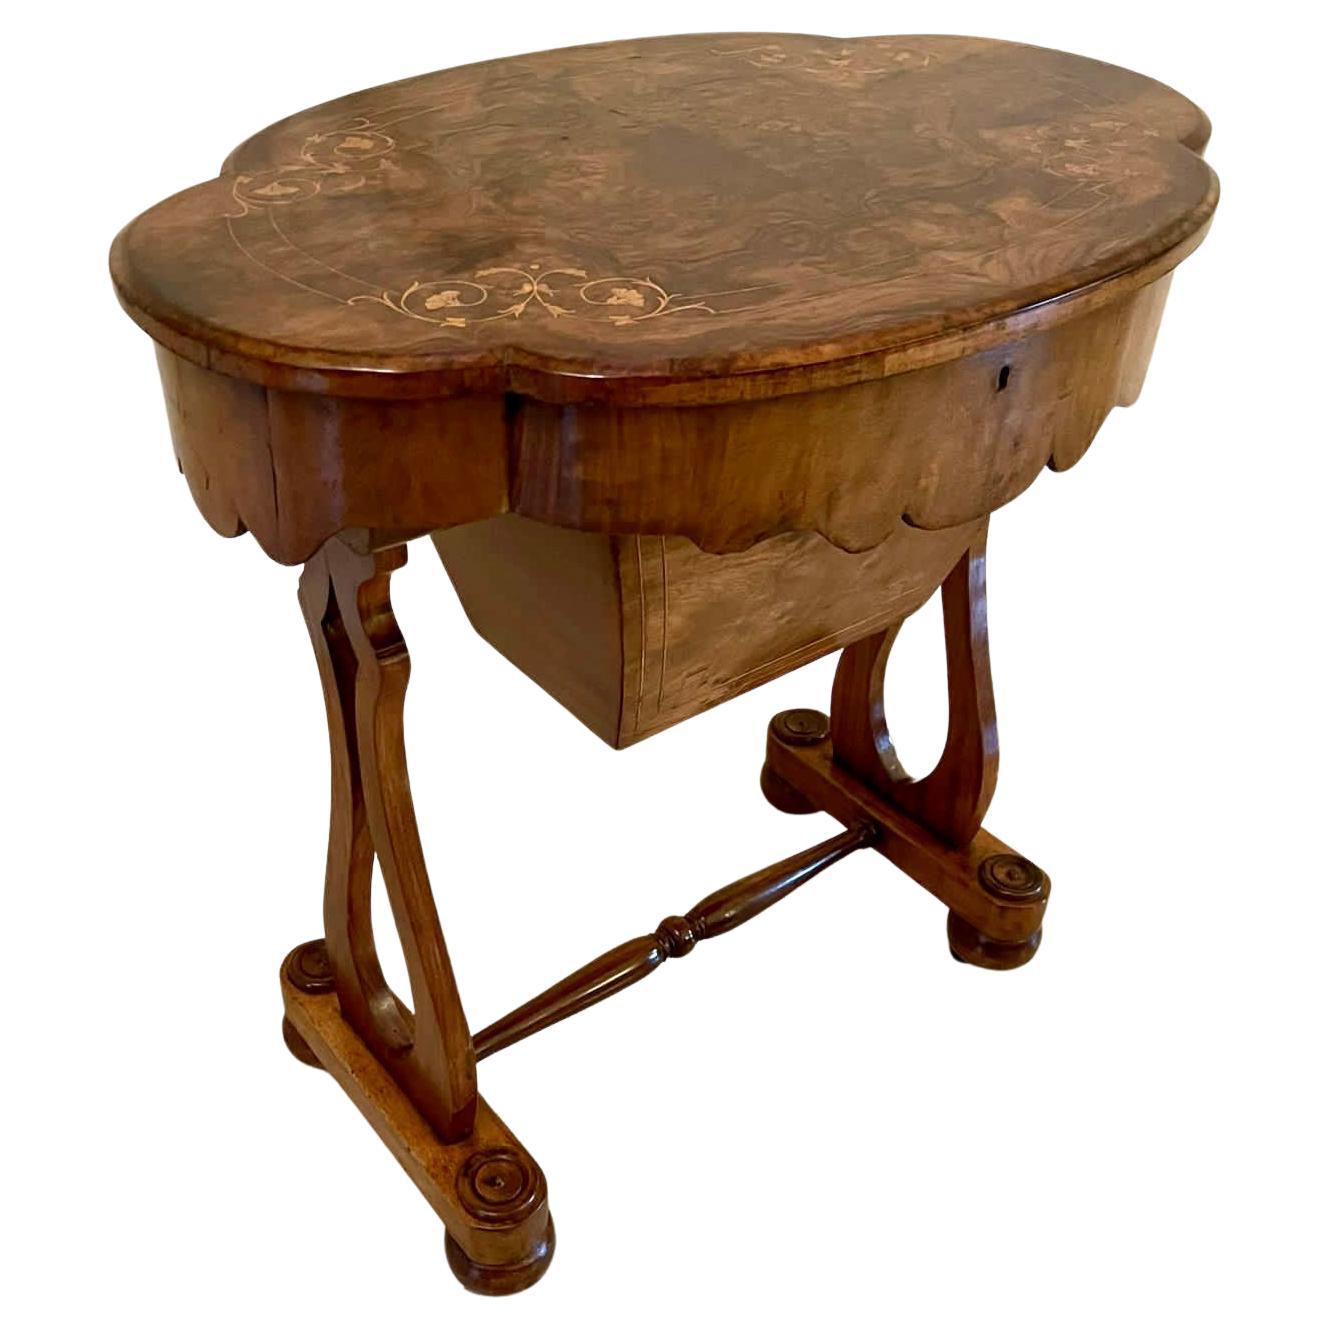 Quality Antique Victorian Burr Walnut Inlaid Work Table